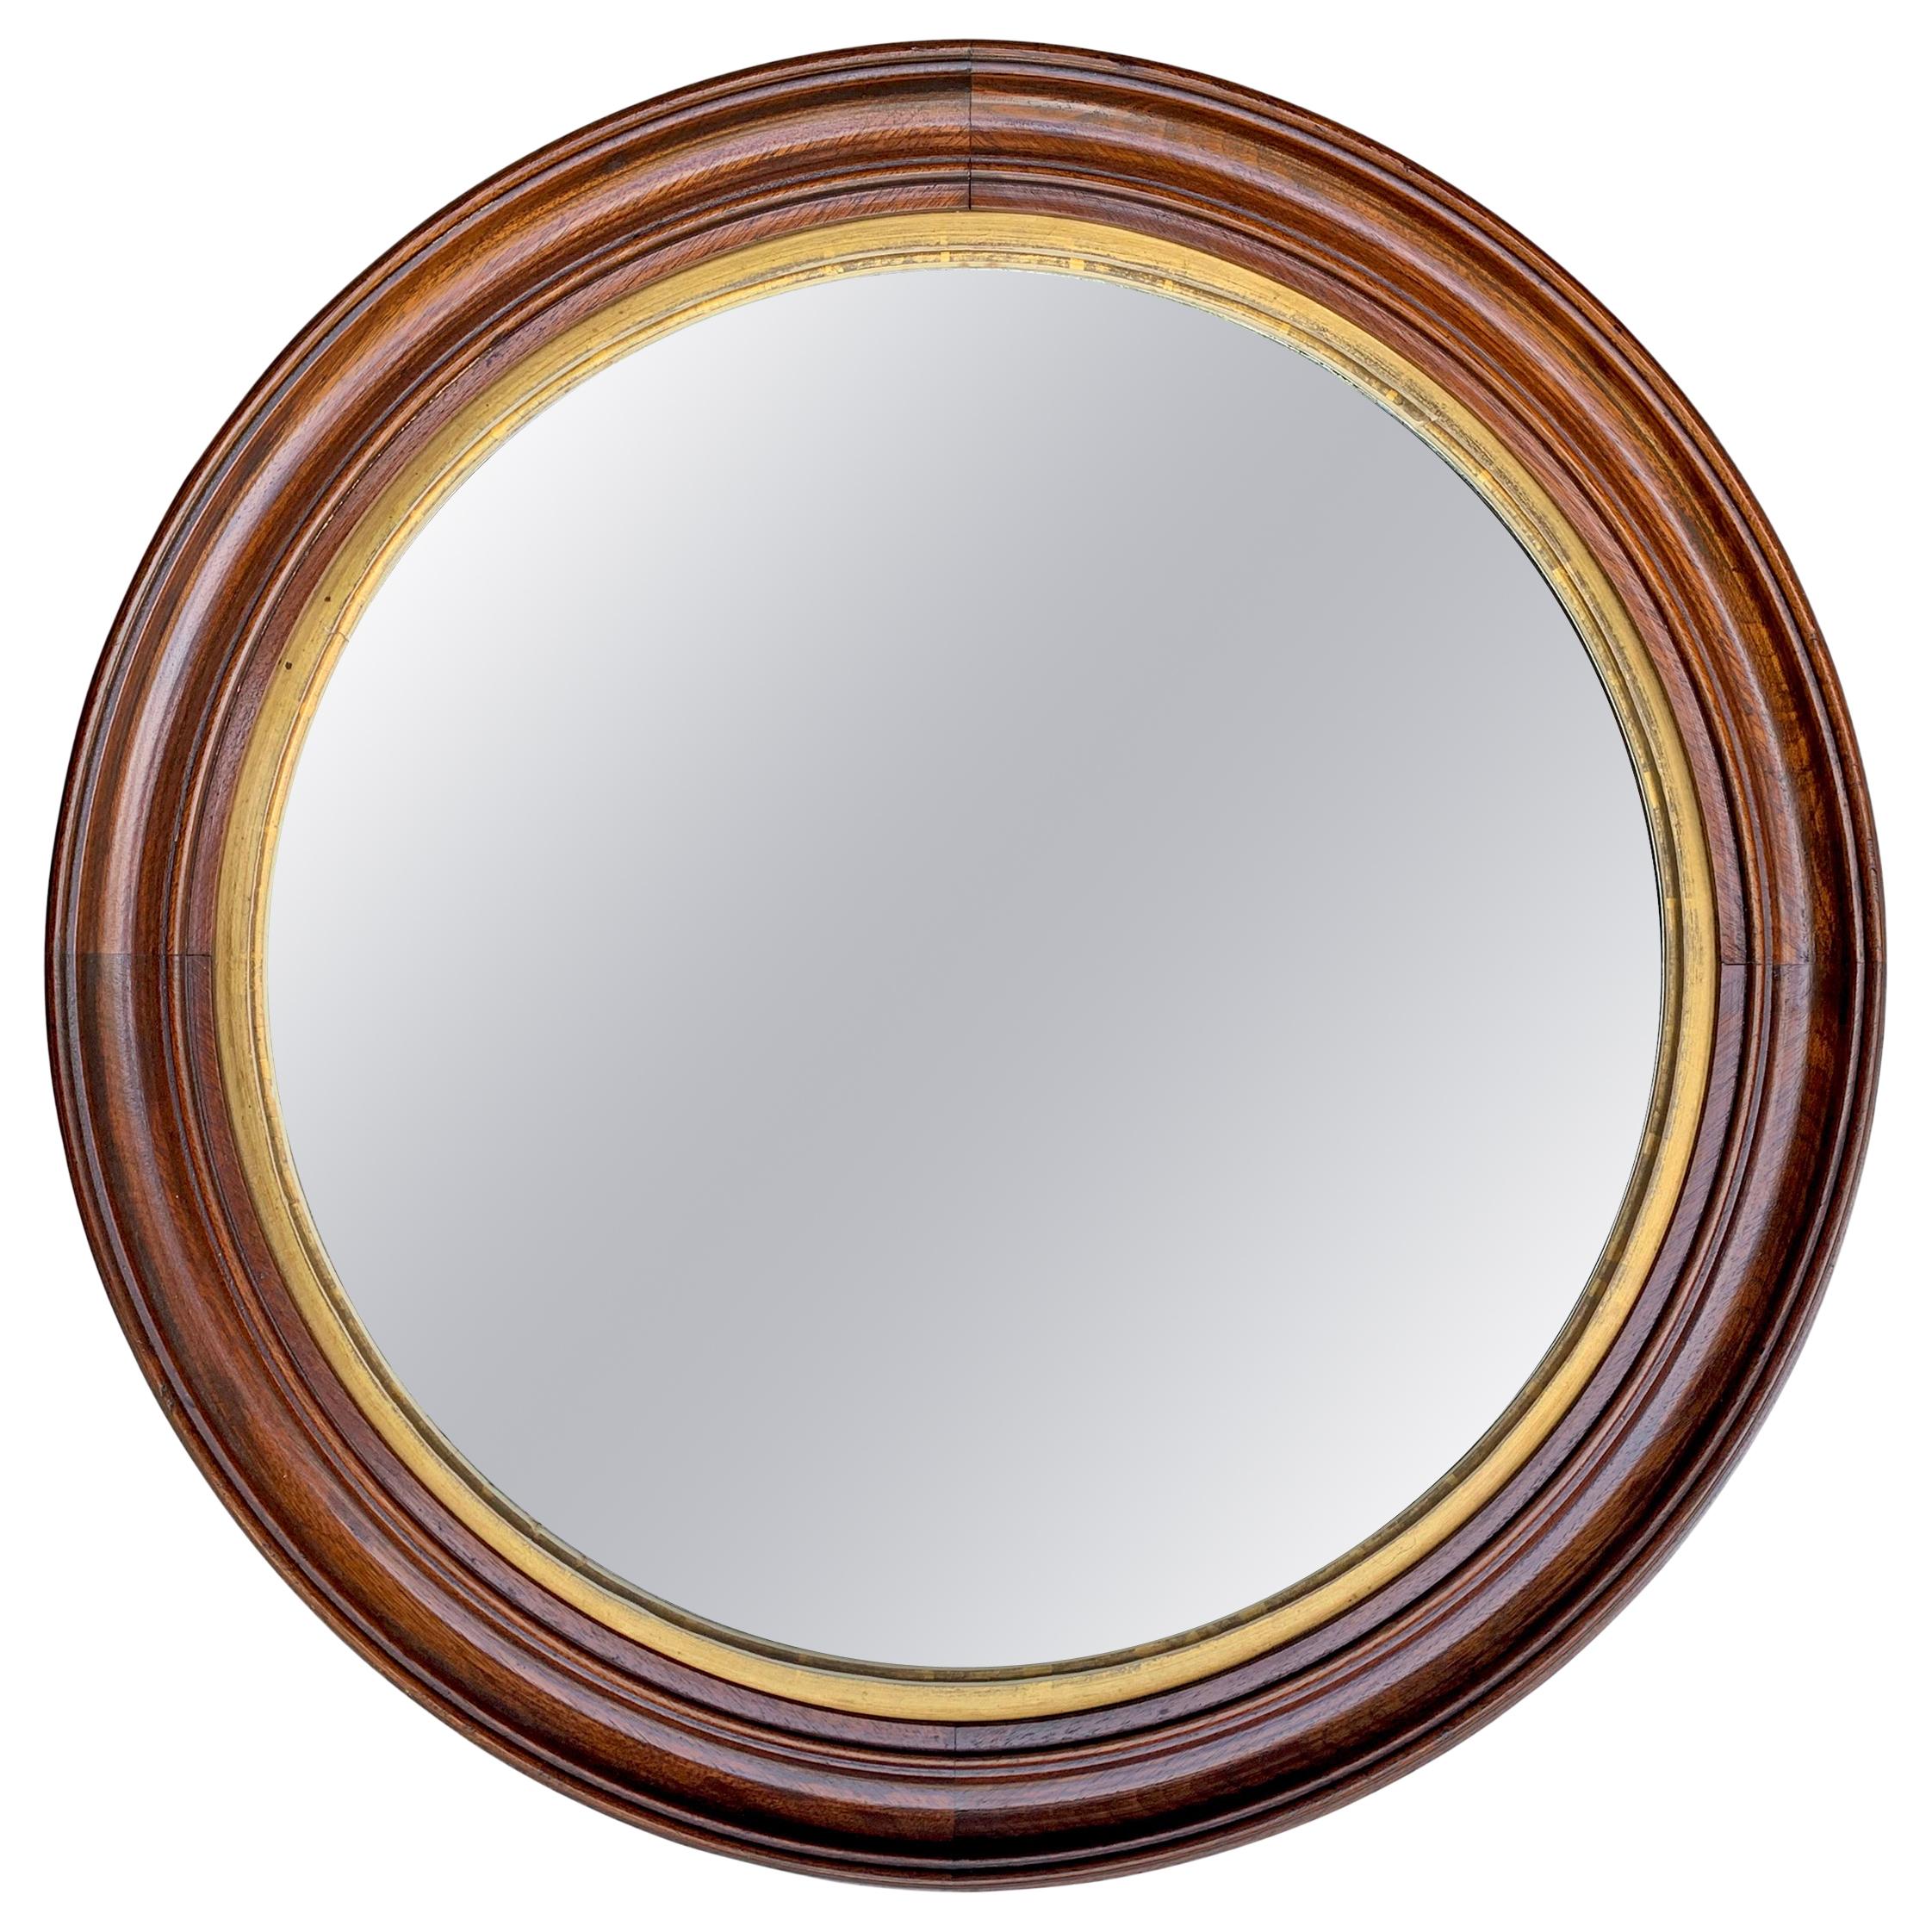 Late 19th Century American Round Mirror